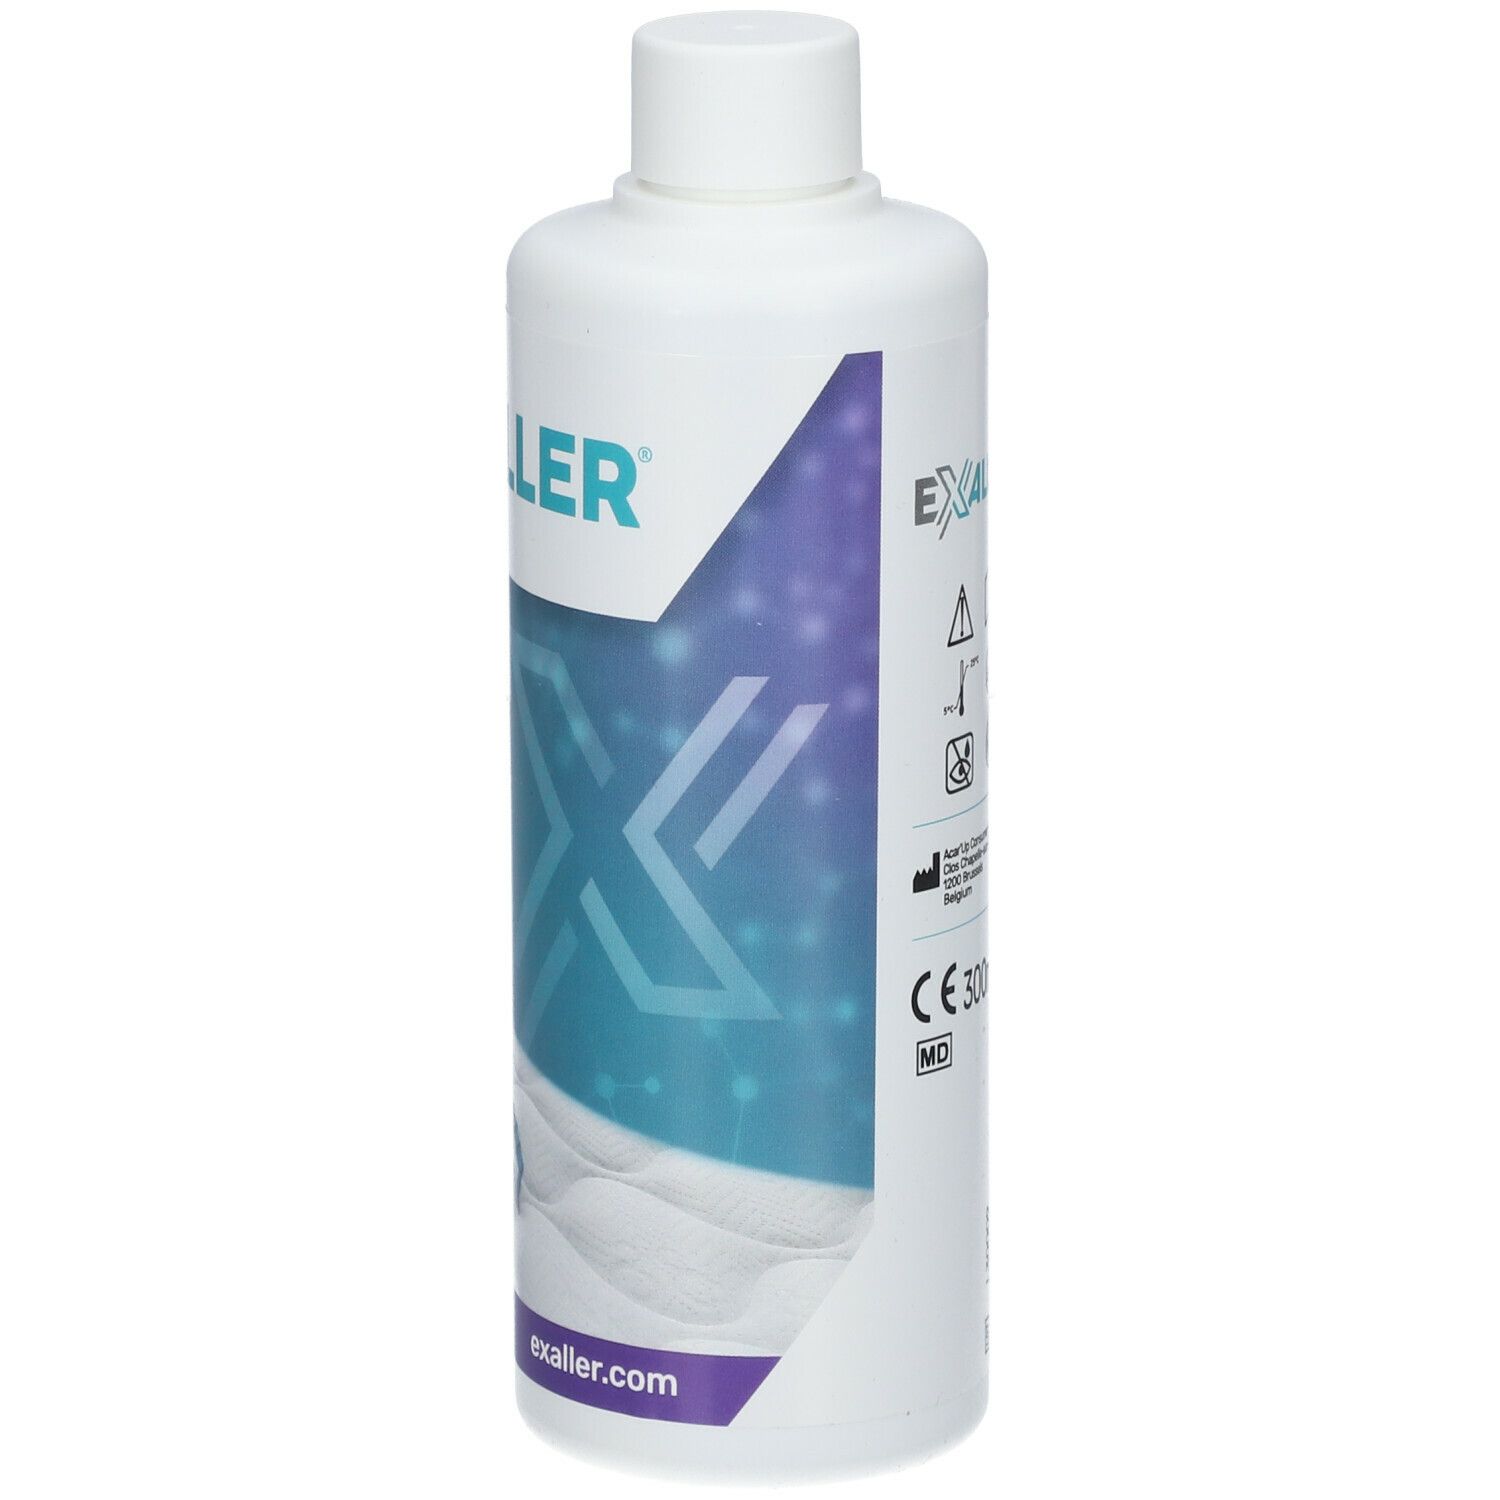 ExAller Spray Anti-Acarien 300 ml